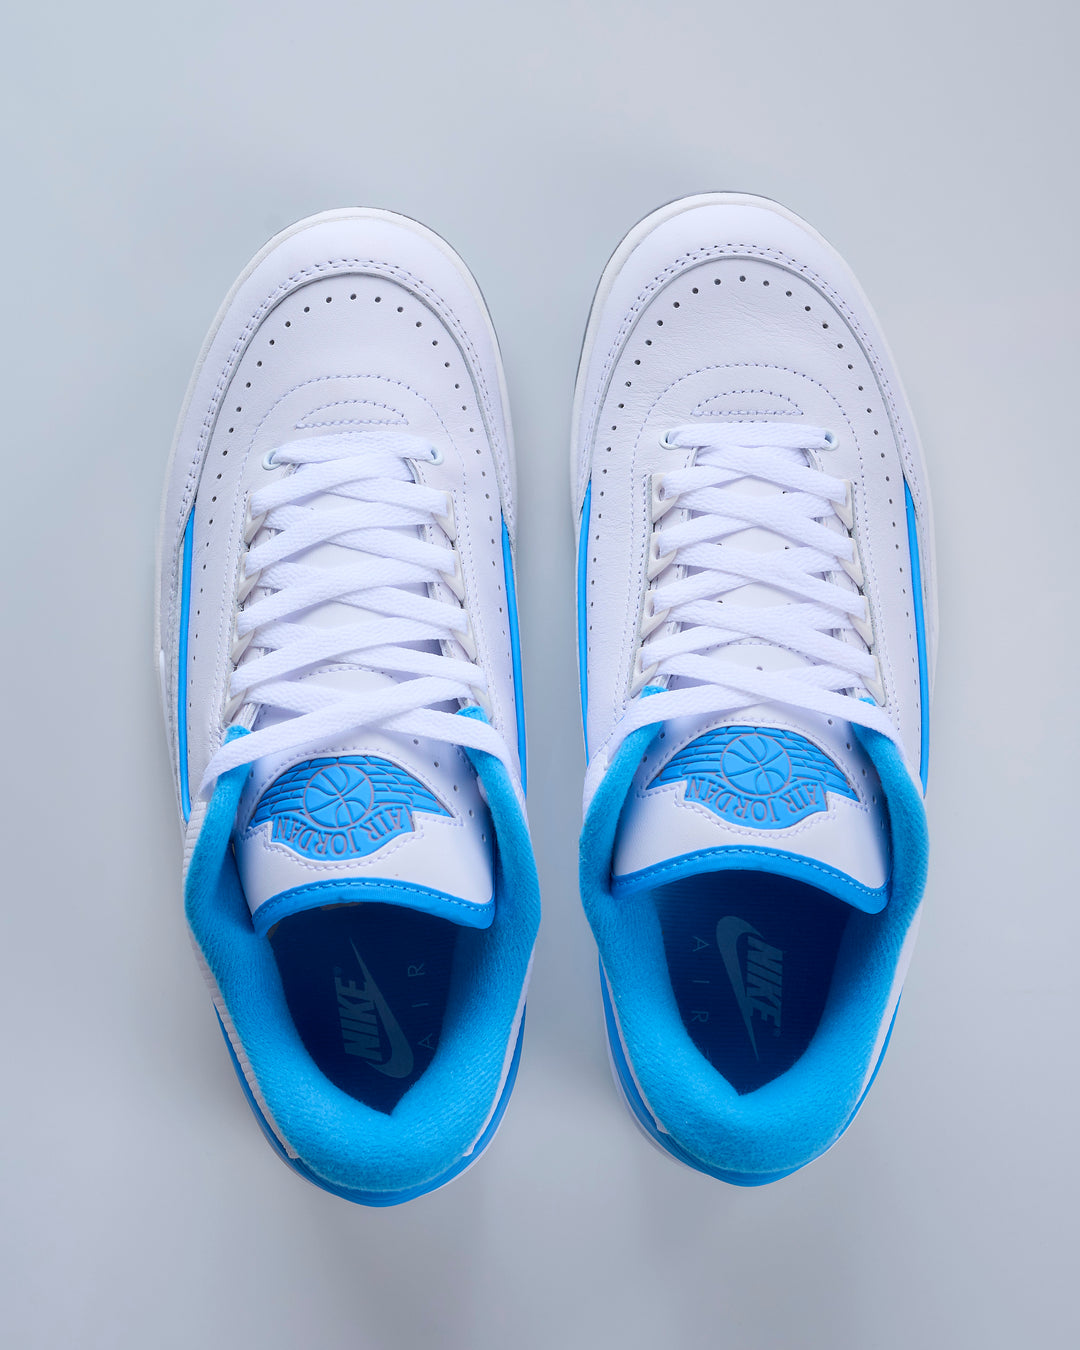 Nike Men's Air Jordan 2 Retro Low White / University Blue-Cement Grey DV9956 104